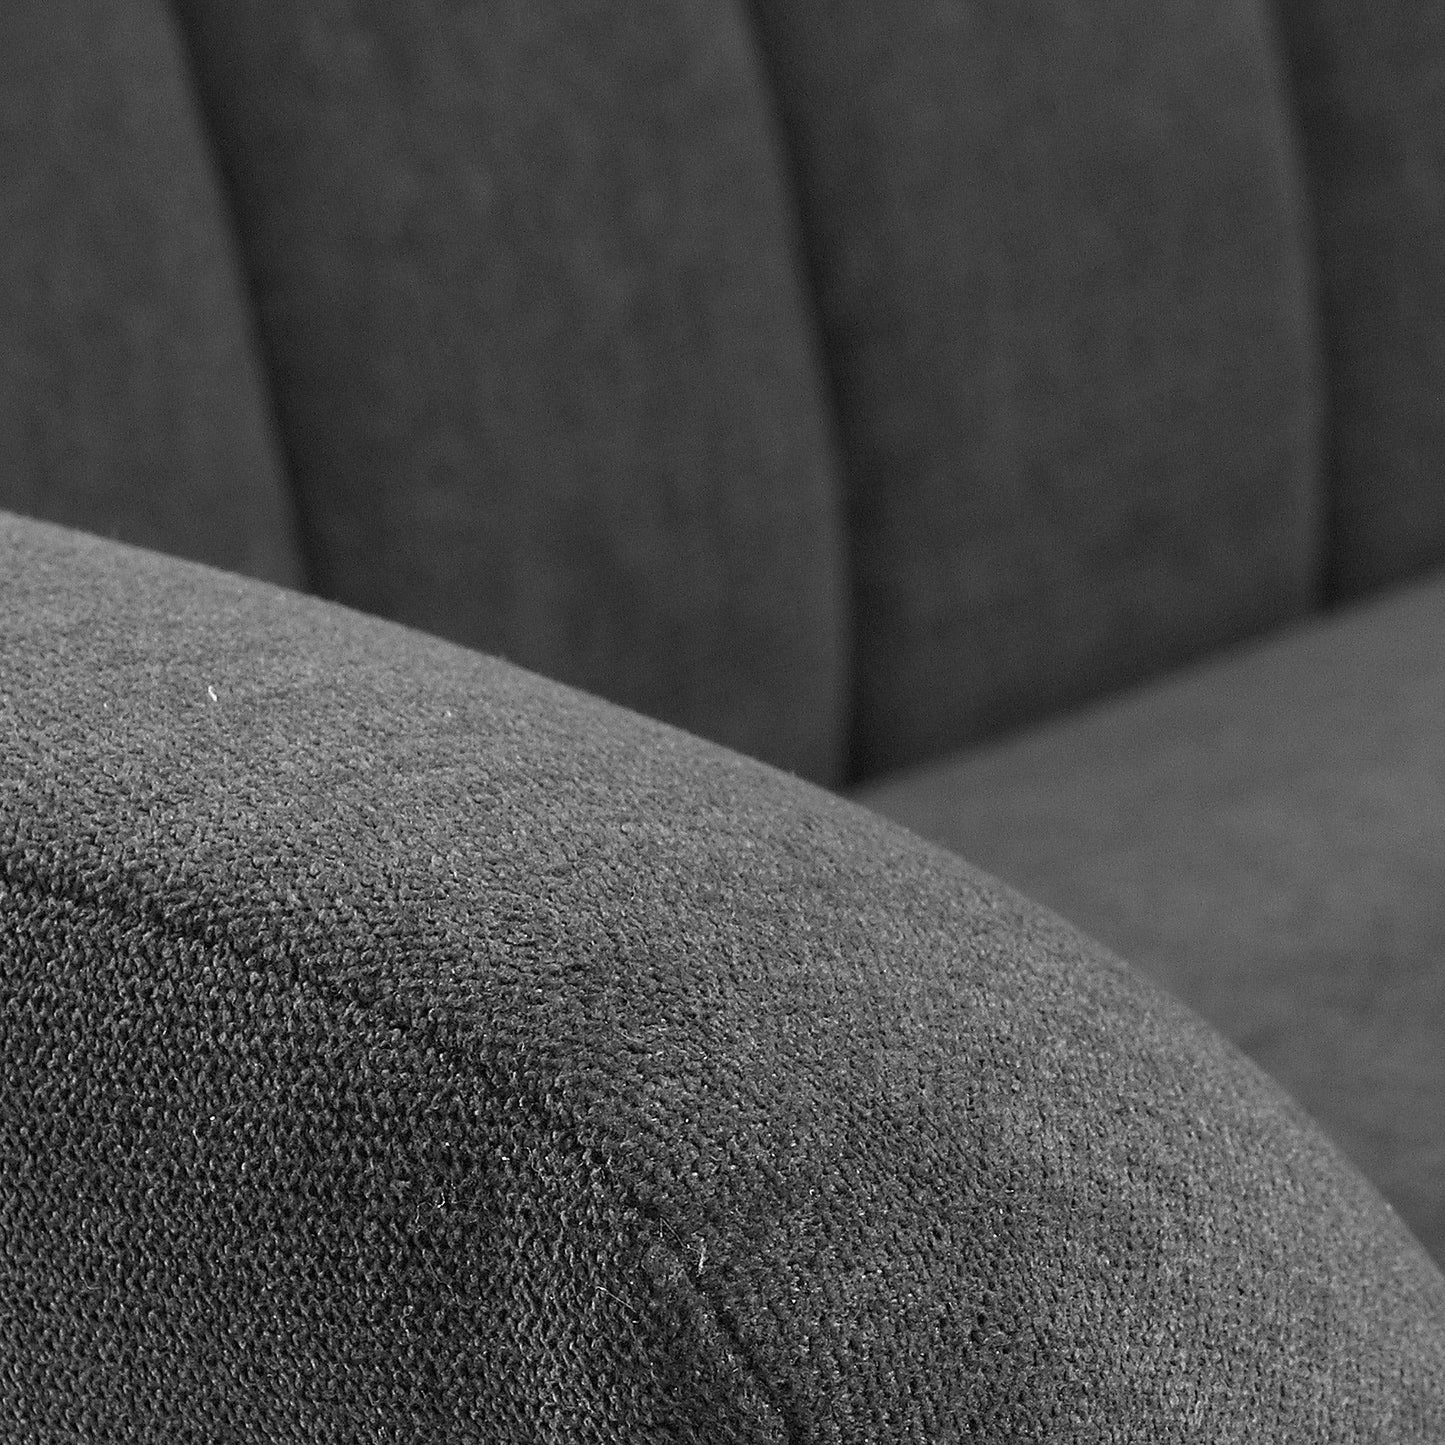 Grey Fabric Sofa